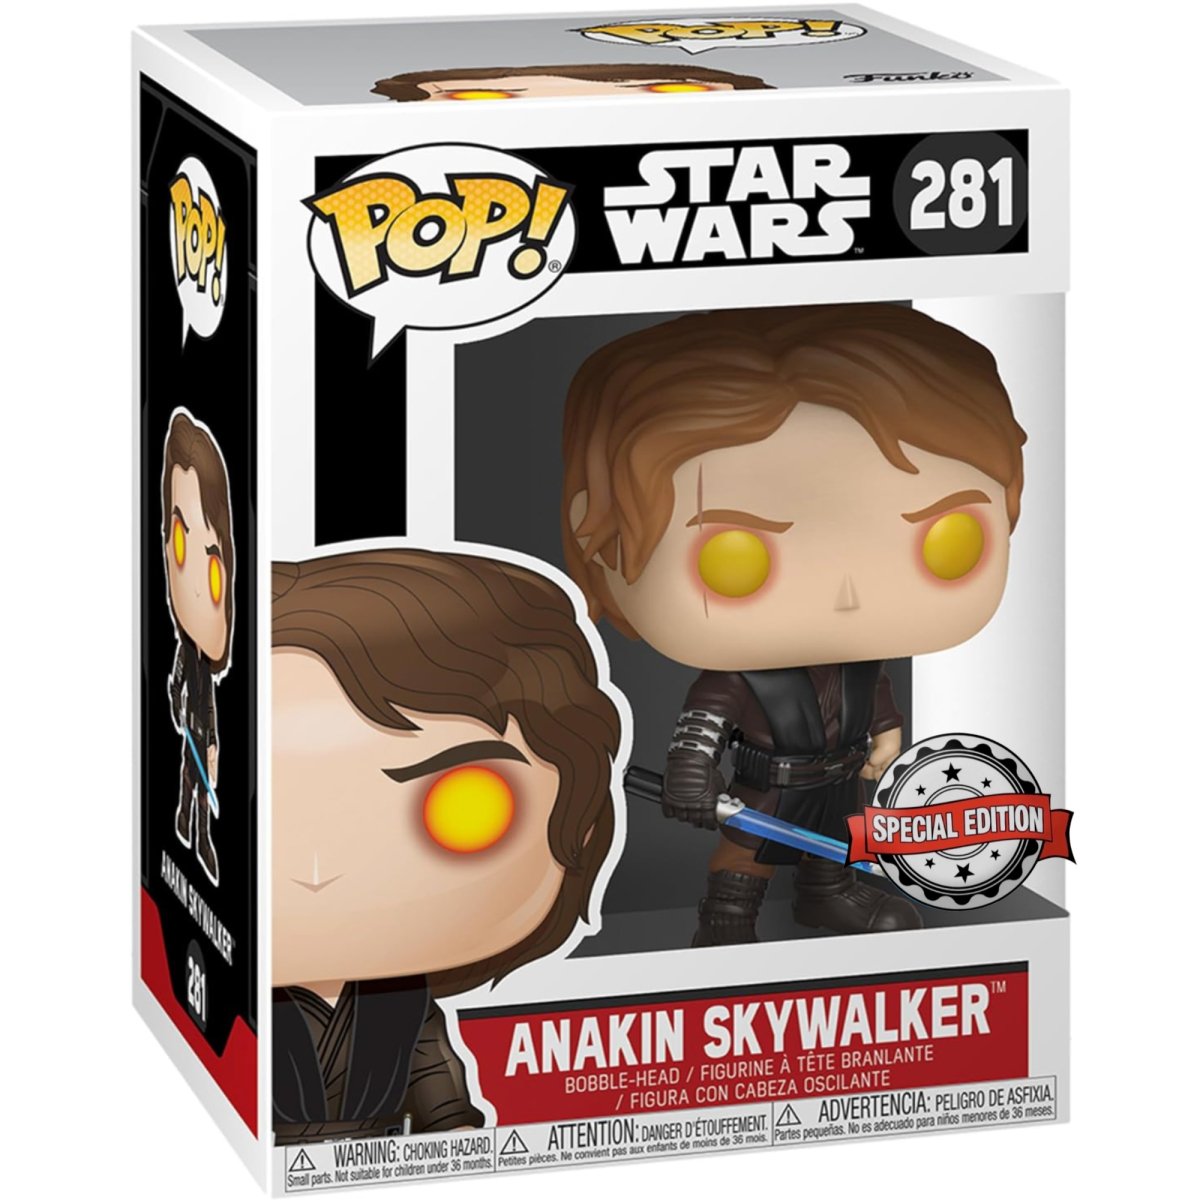 Star Wars - Anakin Skywalker [Dark Side] (Special Edition) #281 - Funko Pop! Vinyl Star Wars - Persona Toys